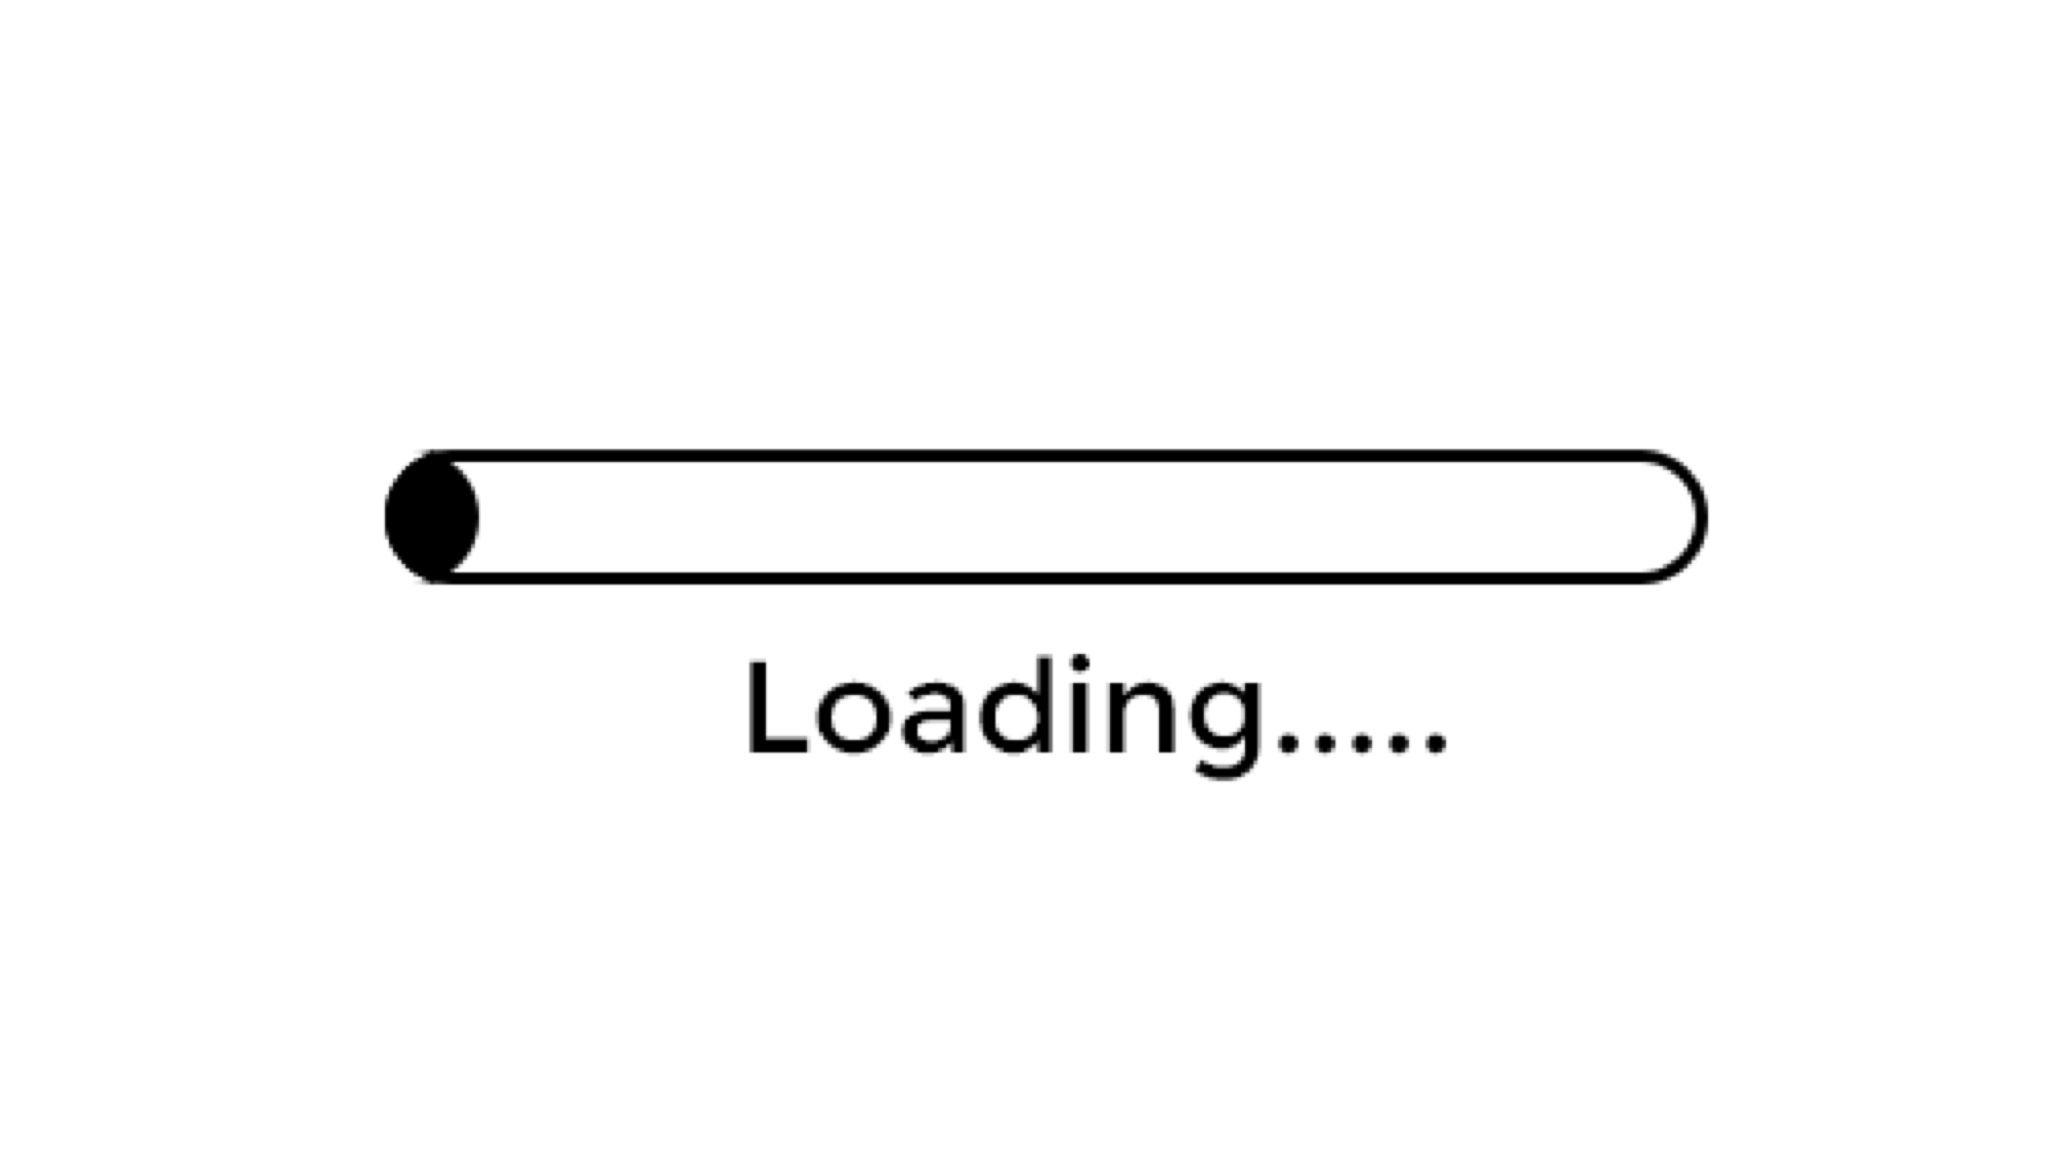 Bad loading. Loading картинка. Загрузка gif. Loading без фона. Надпись loading.